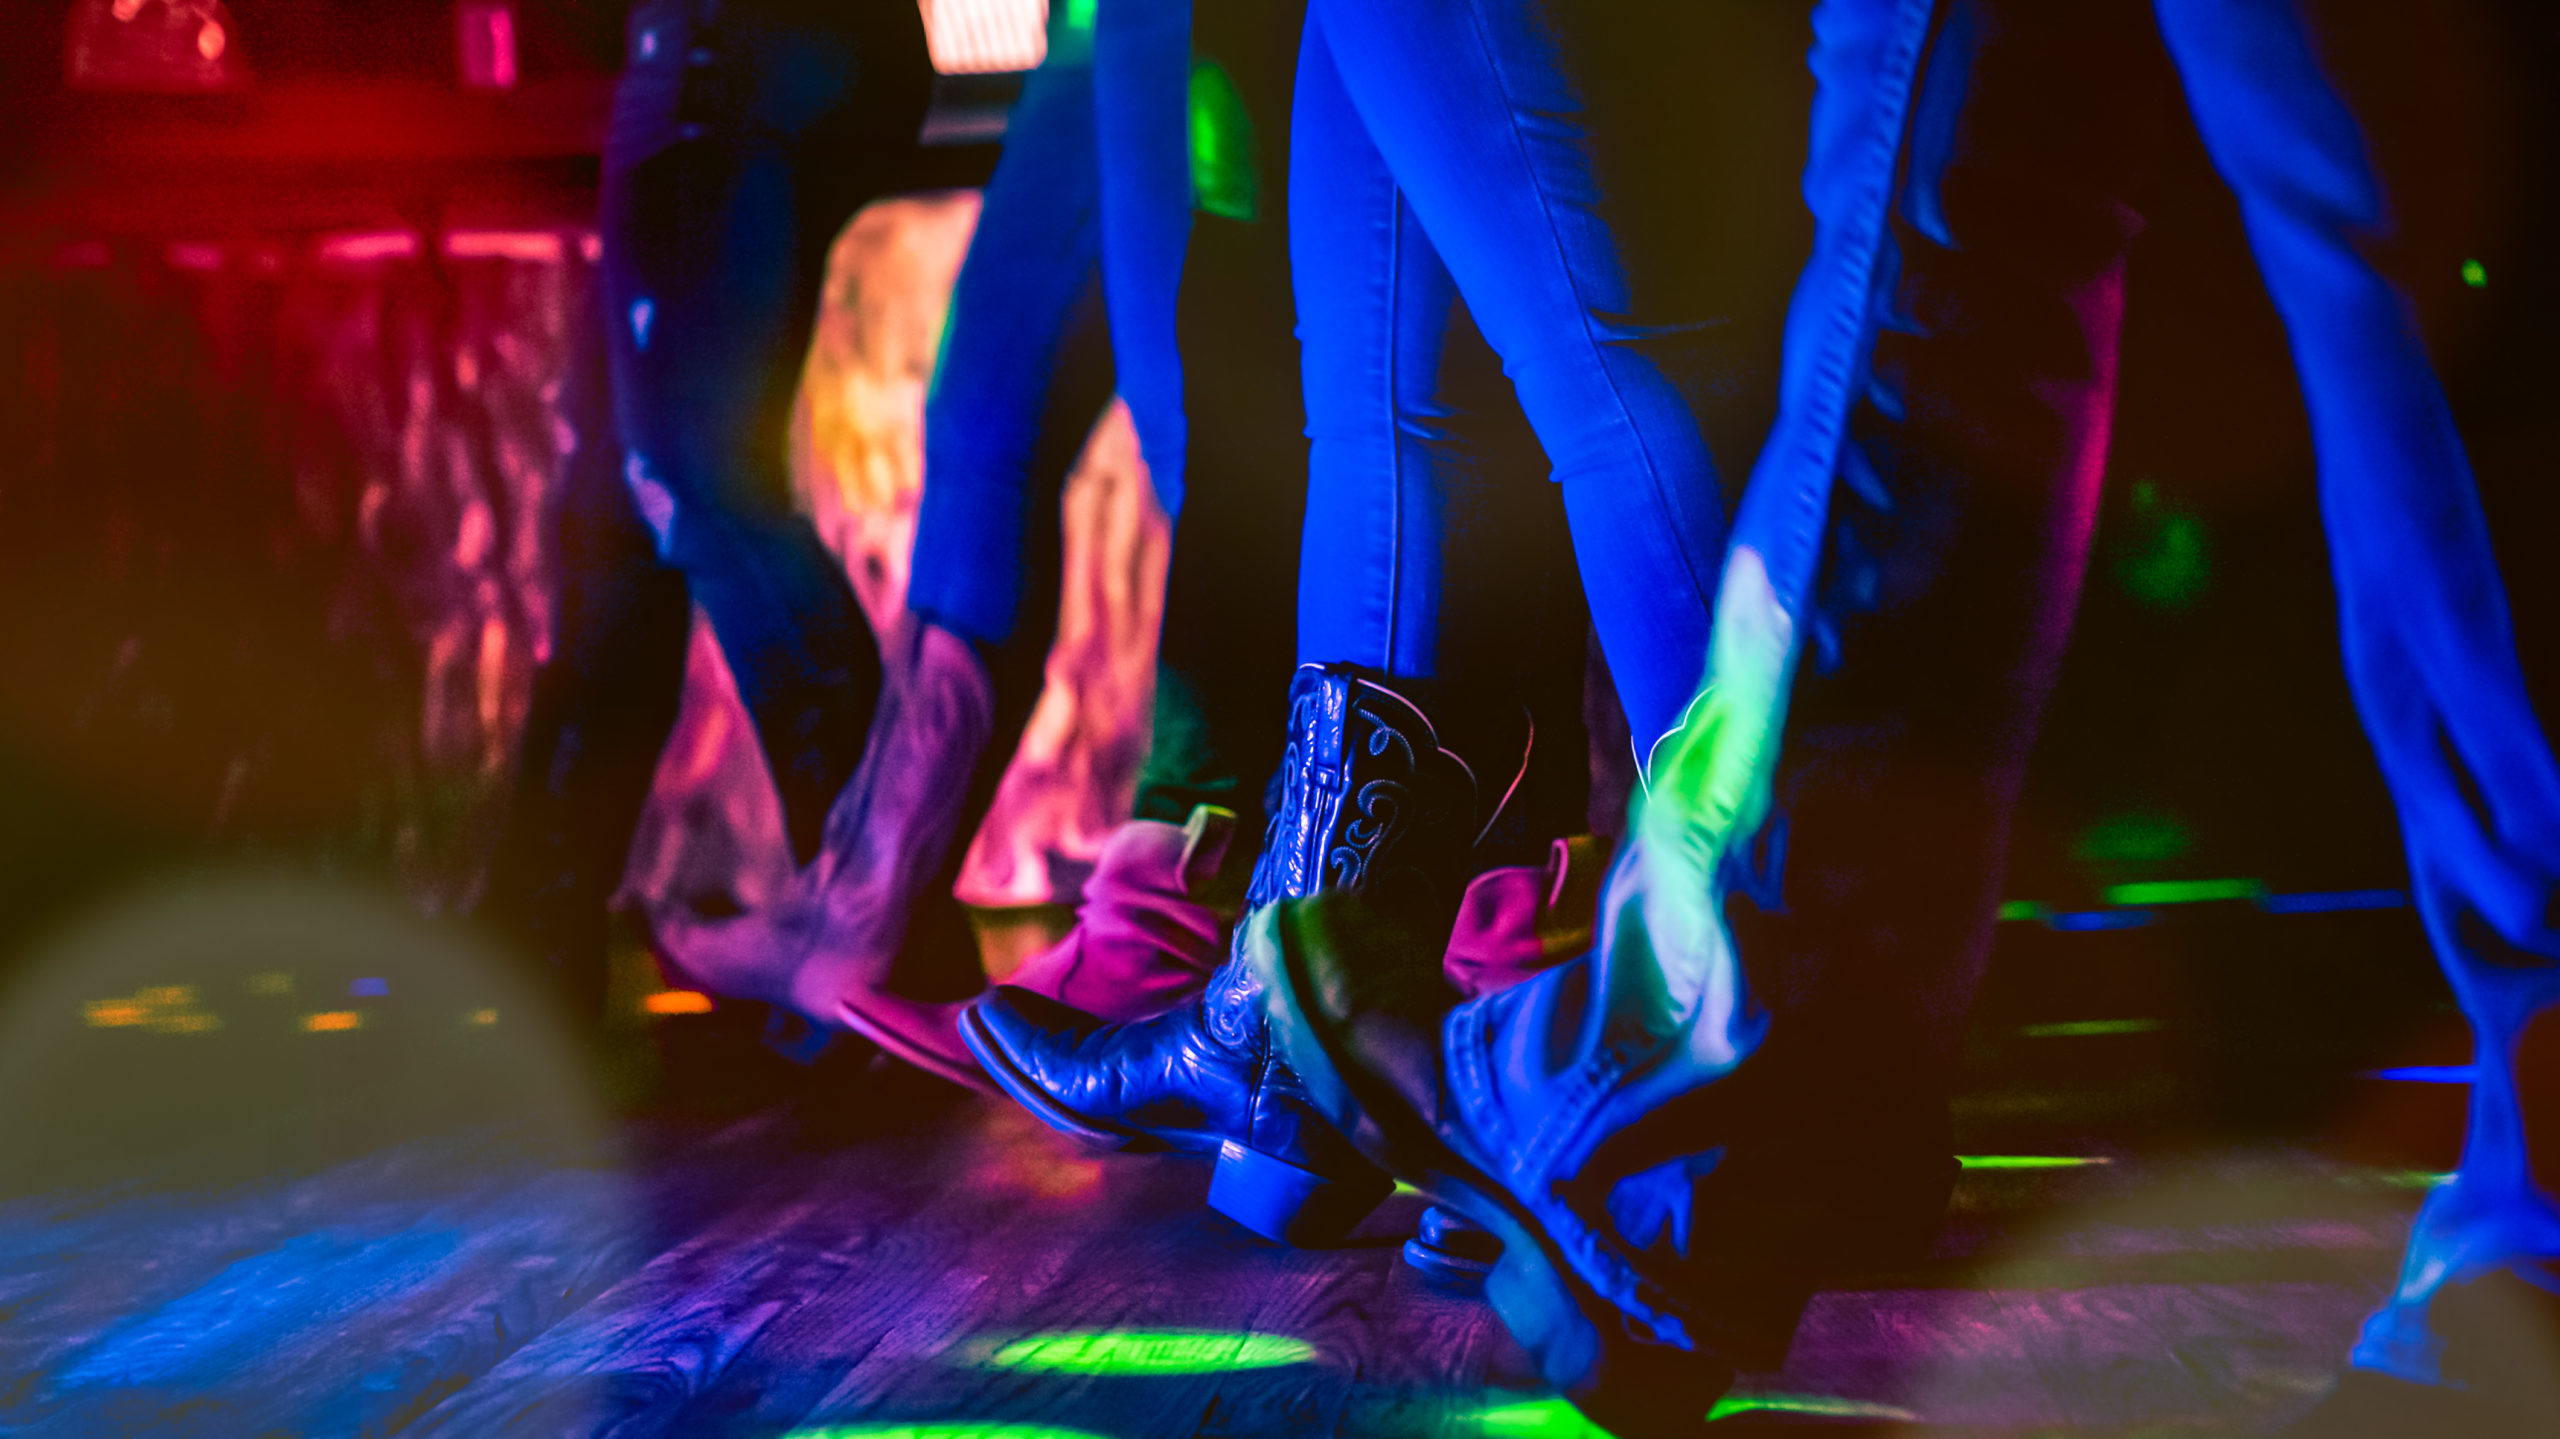 Boots on the dance floor